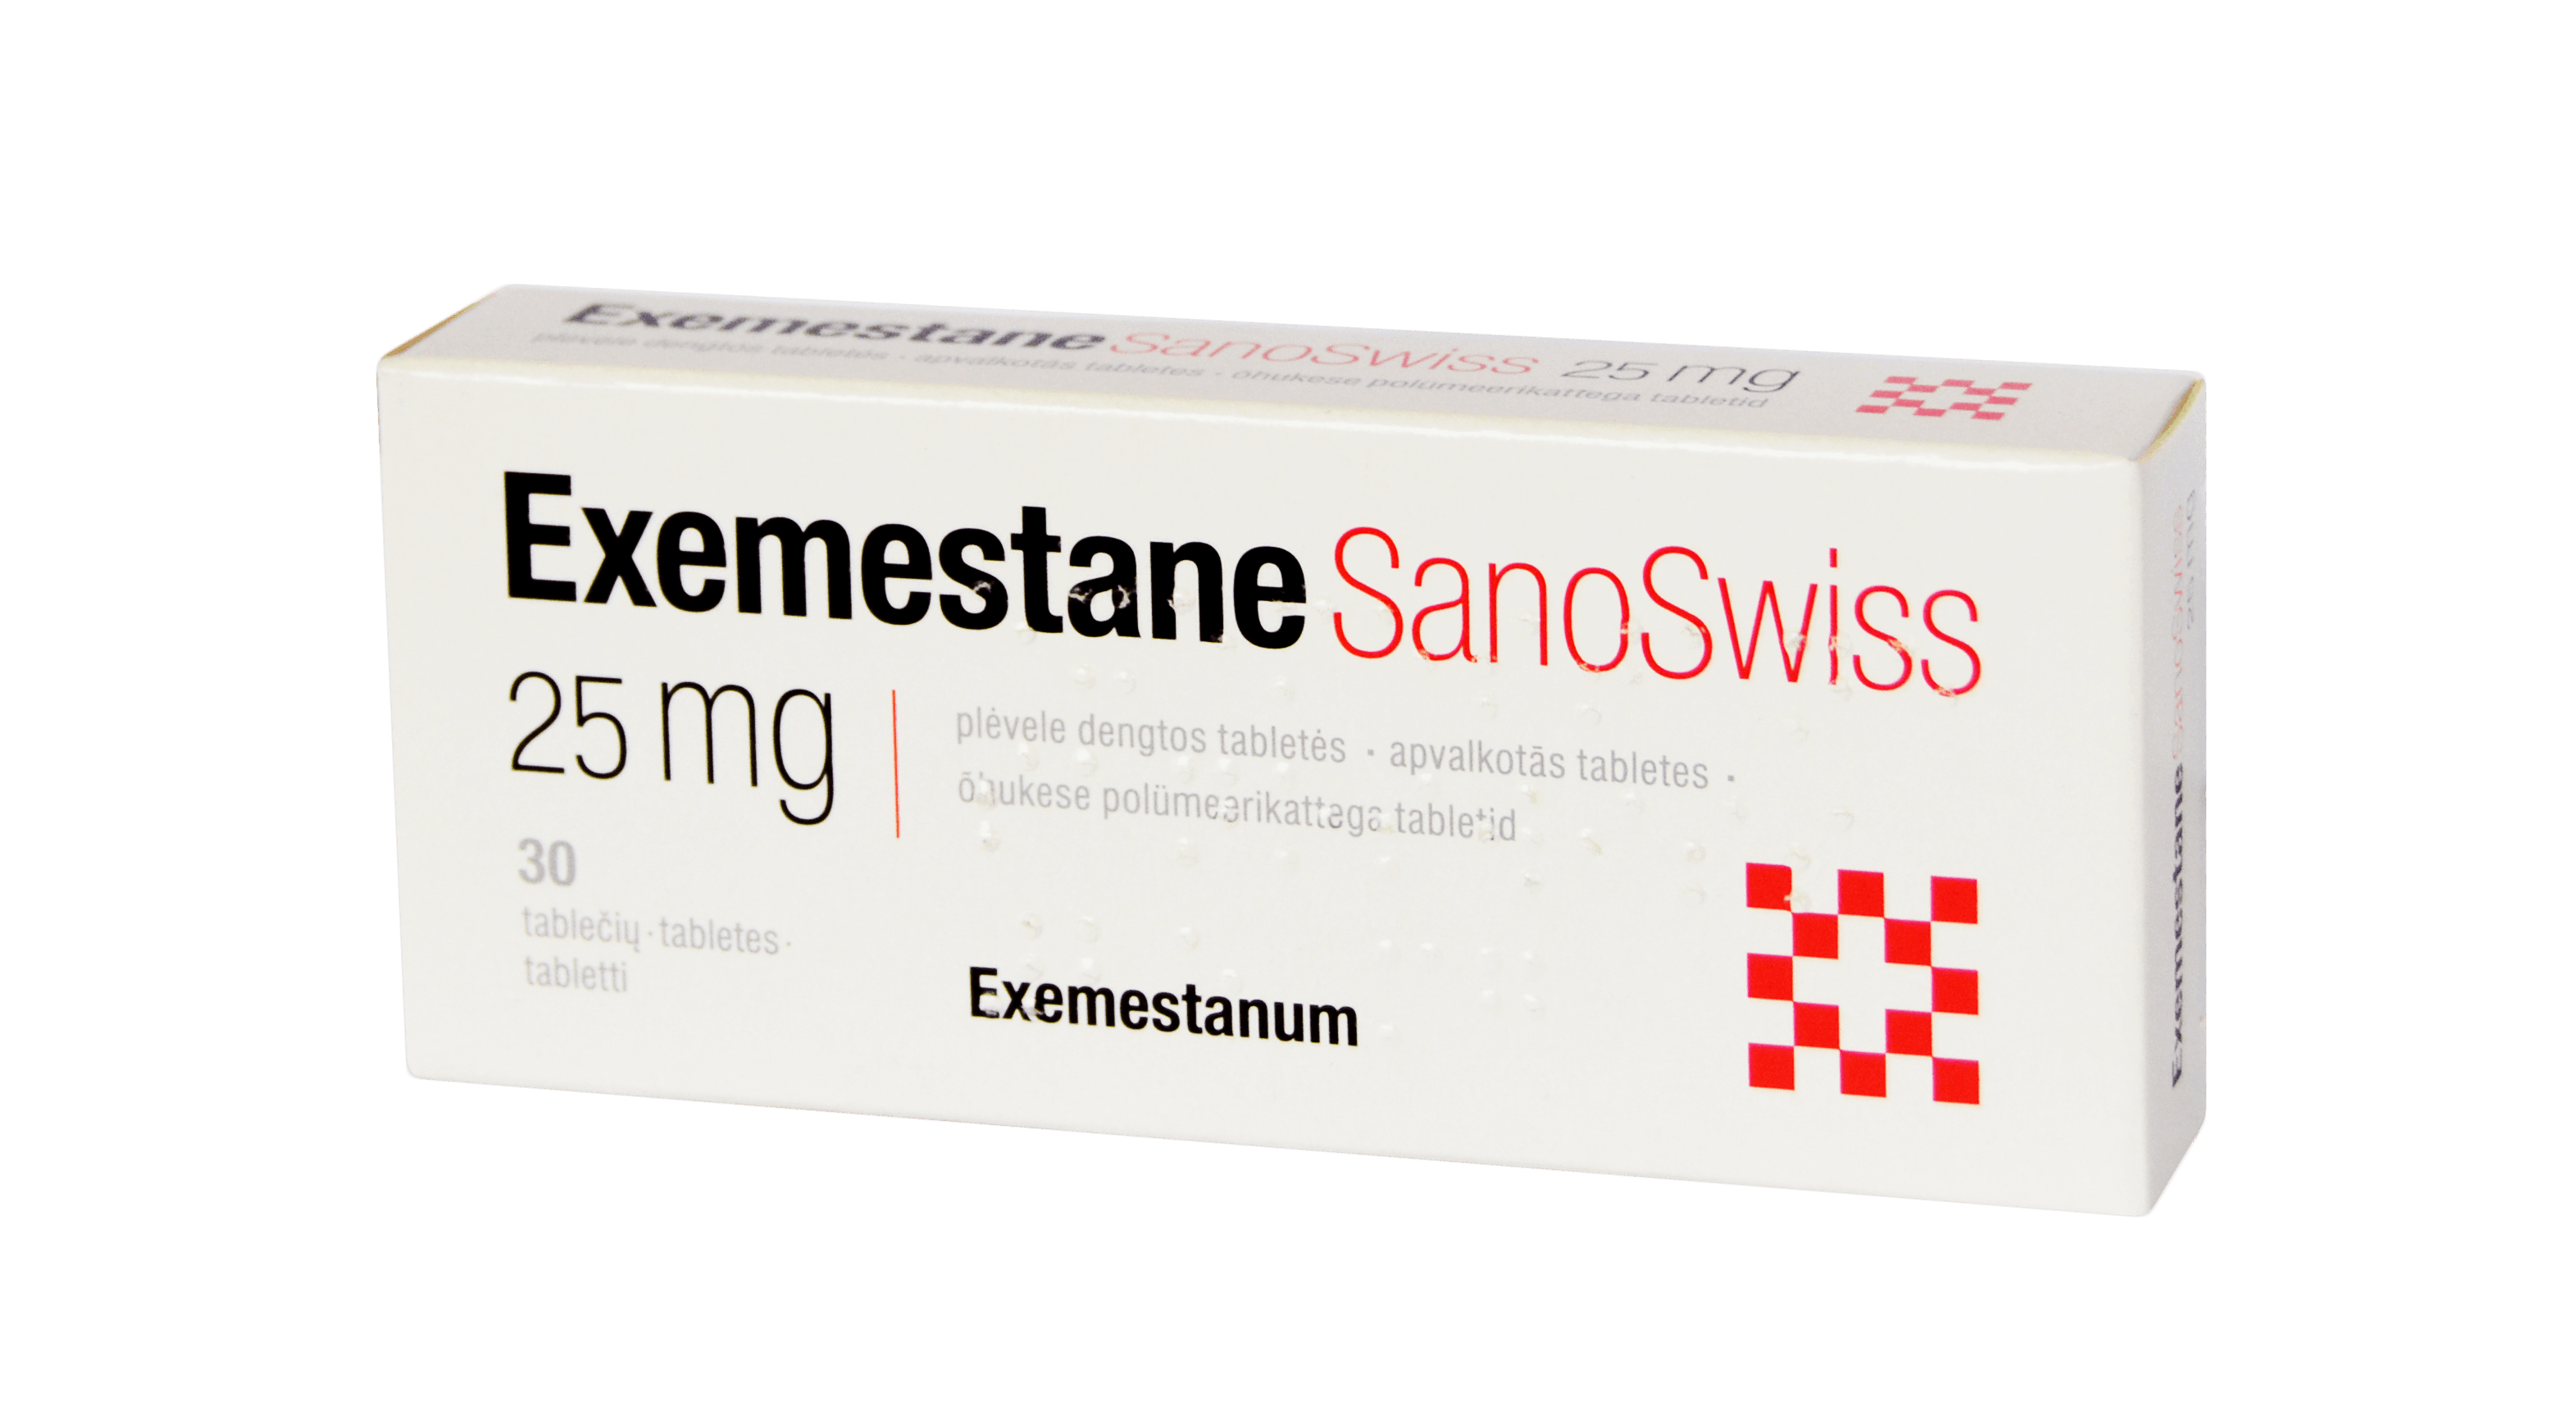 Exemestane Sanoswiss 25mg (30 tablets)